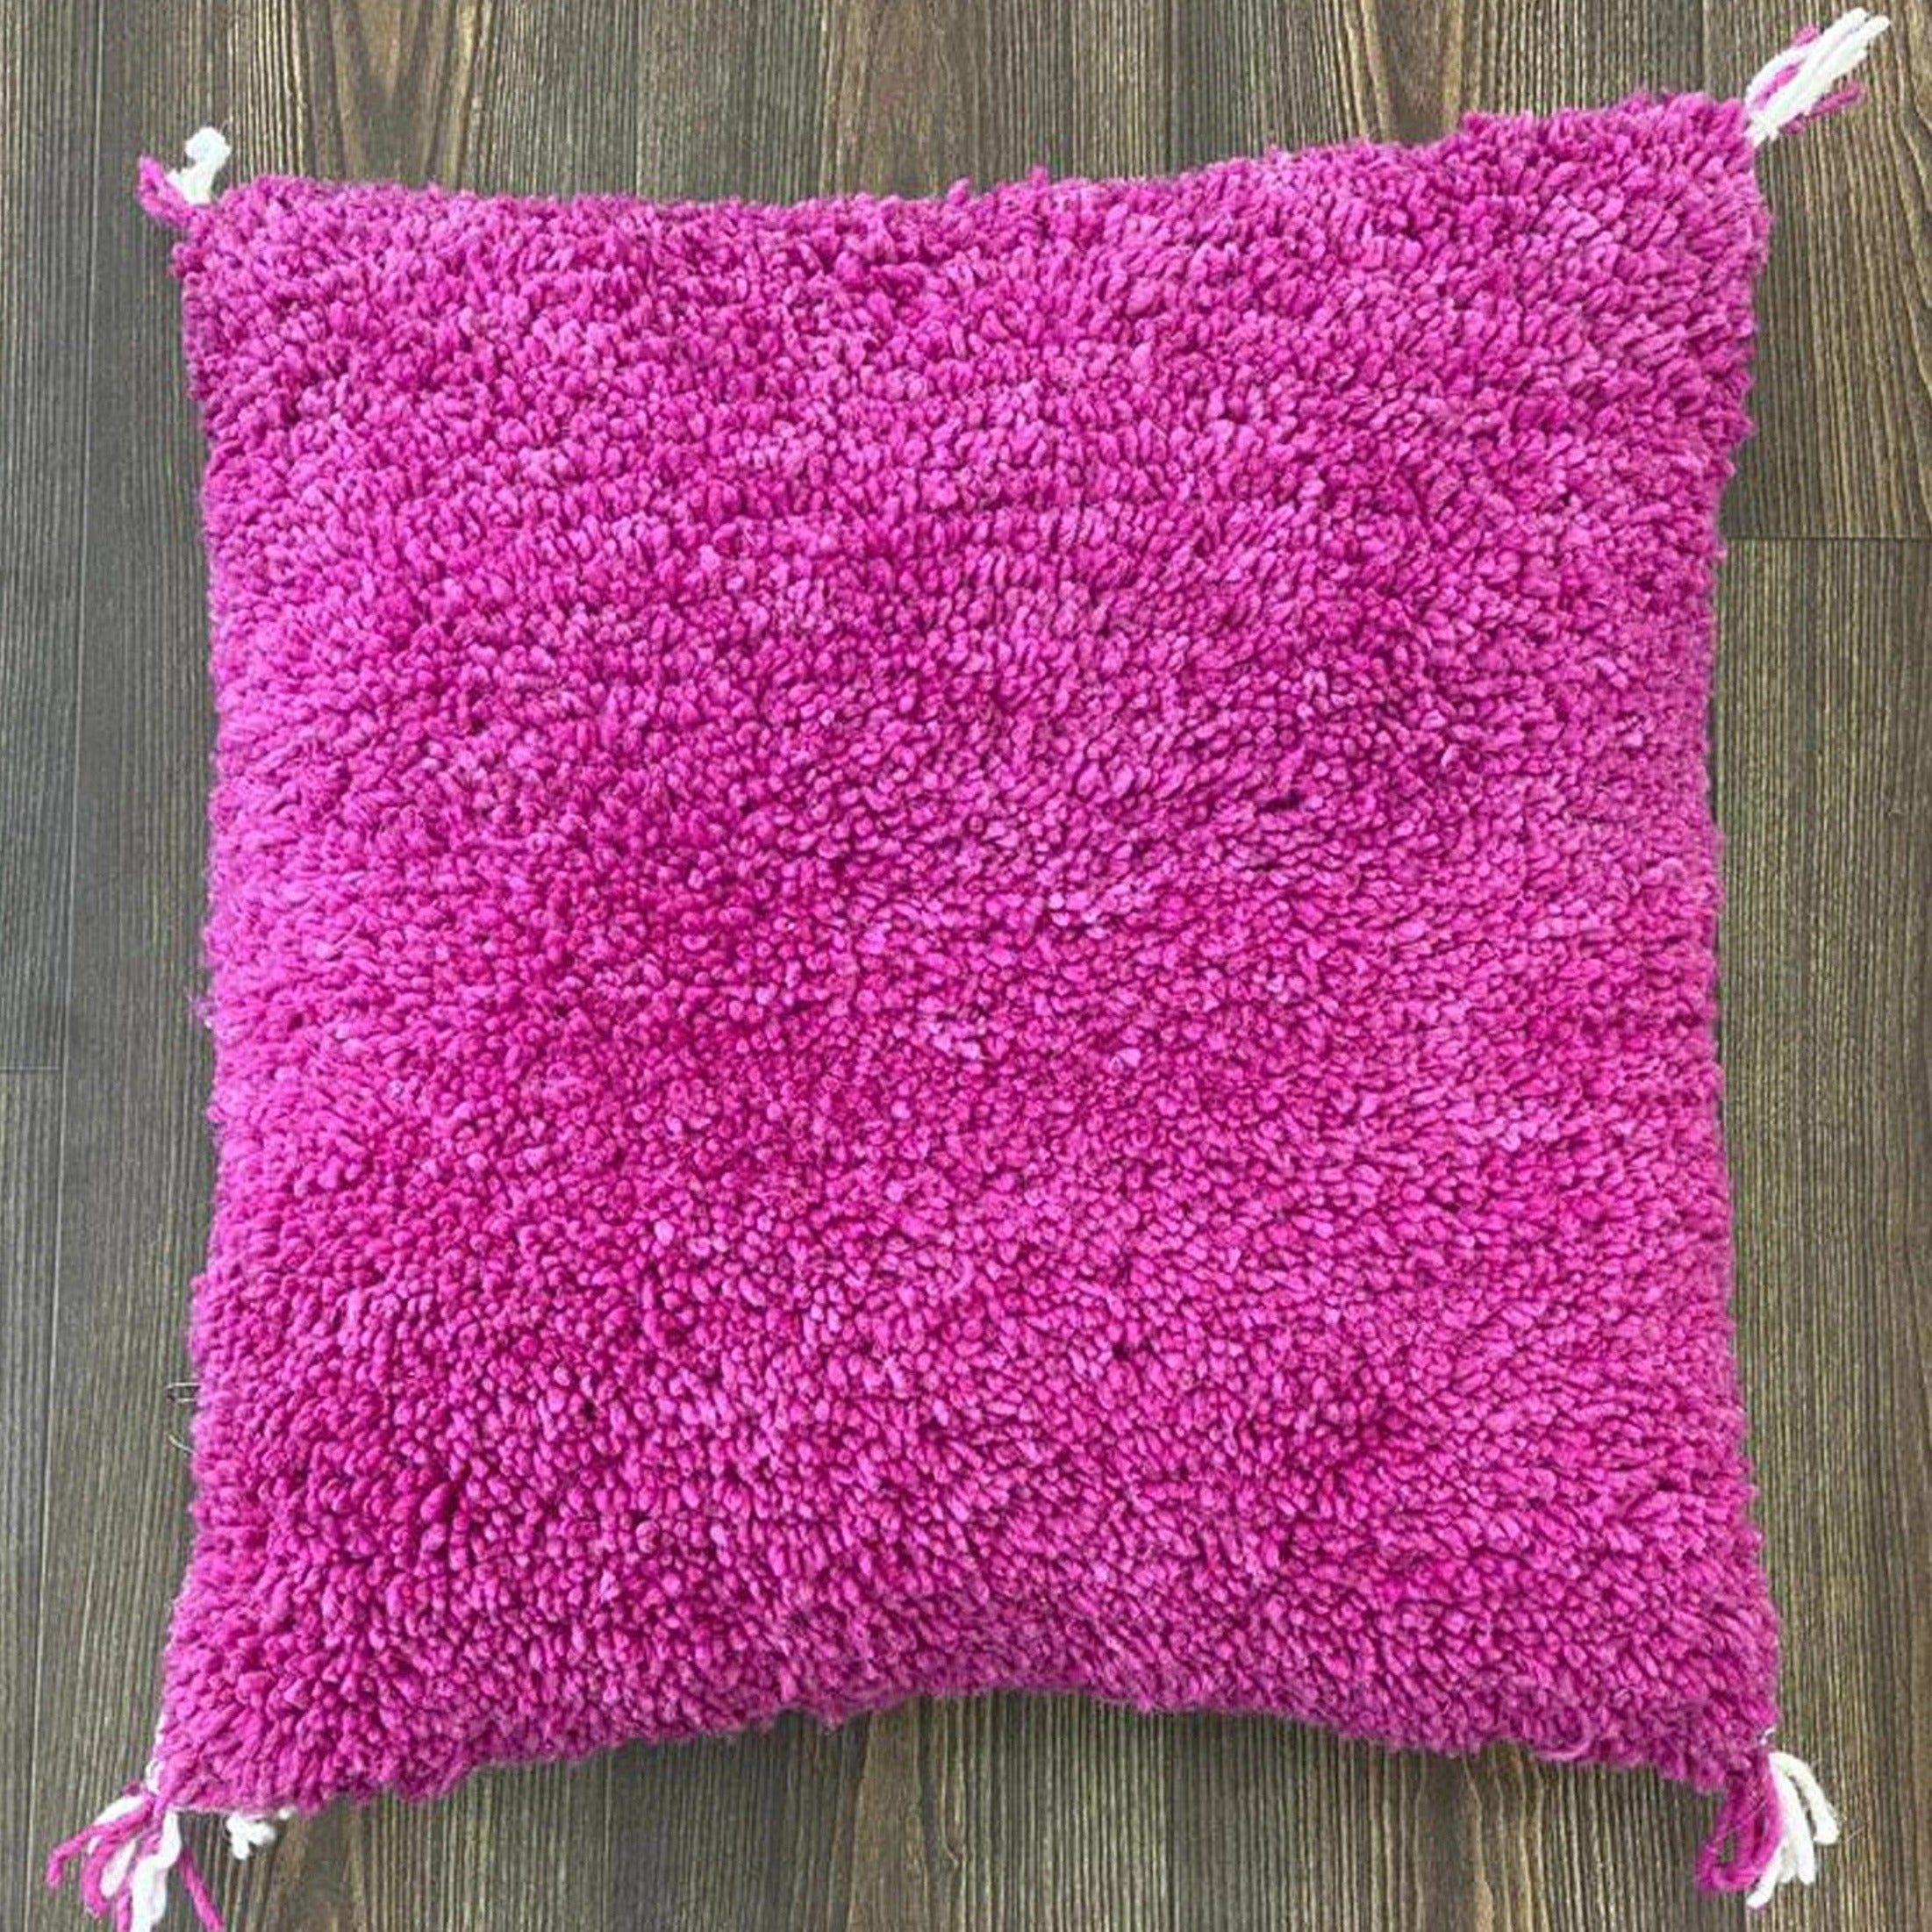 Berber Pink Wool Pillow | Cozy Decor Accent